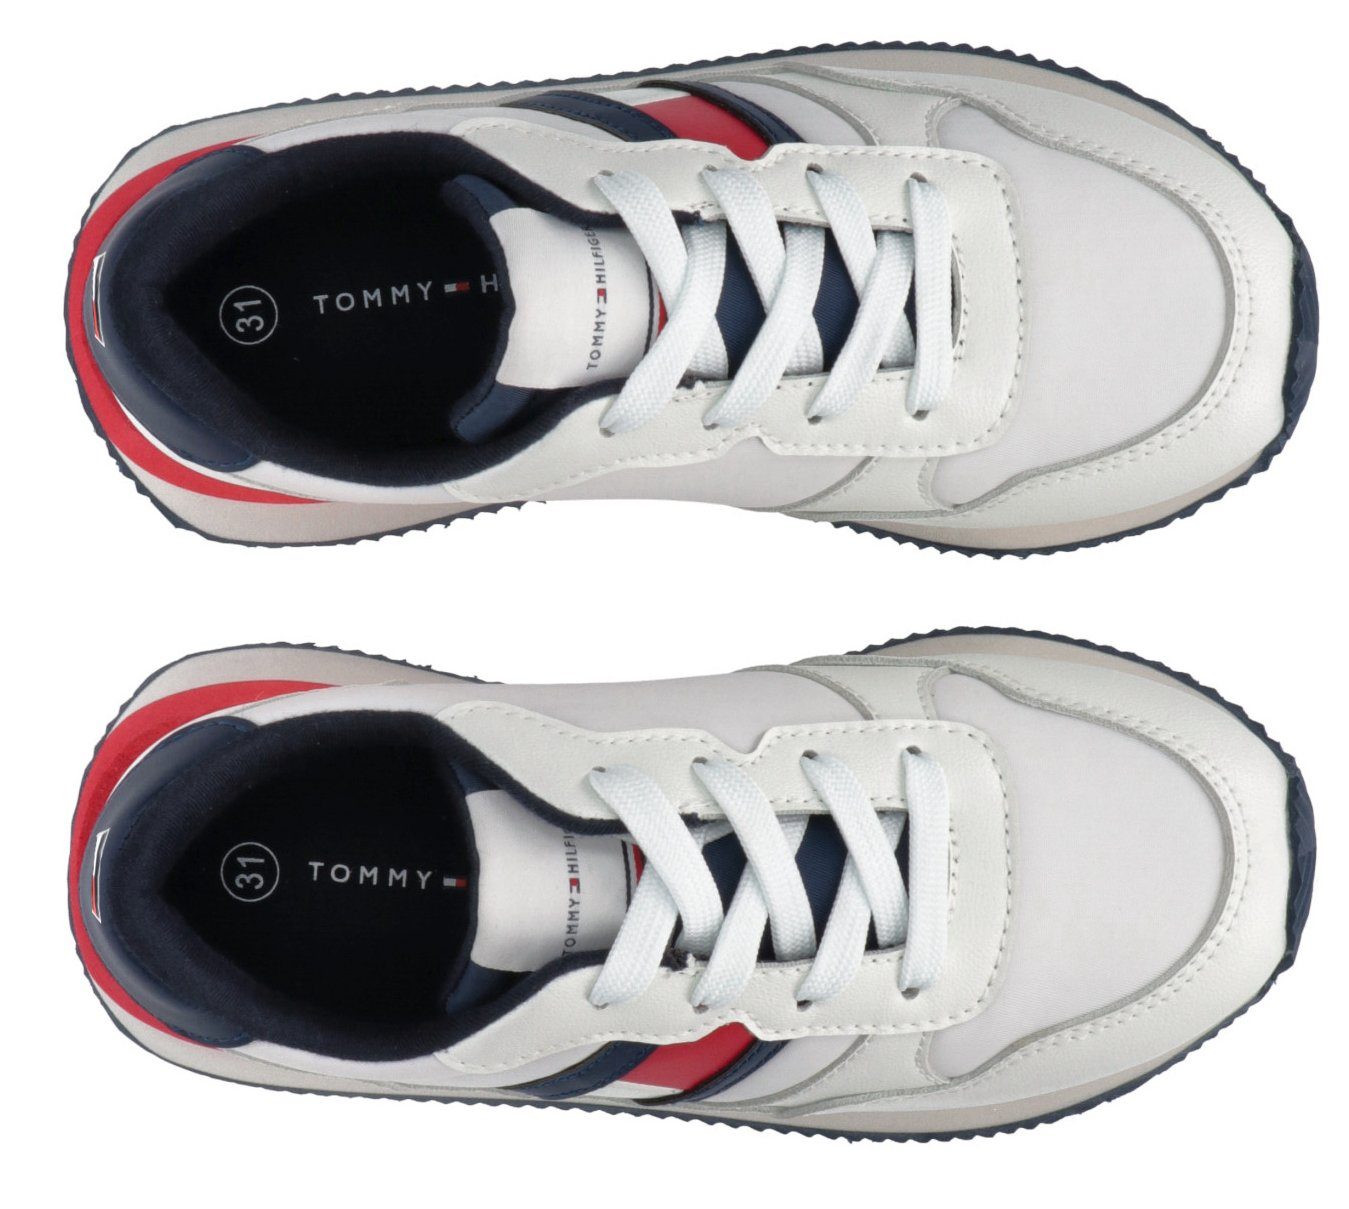 Tommy Hilfiger FLAG LOW farbigem mit Sohleneinsatz SNEAKER LACE-UP Sneaker CUT